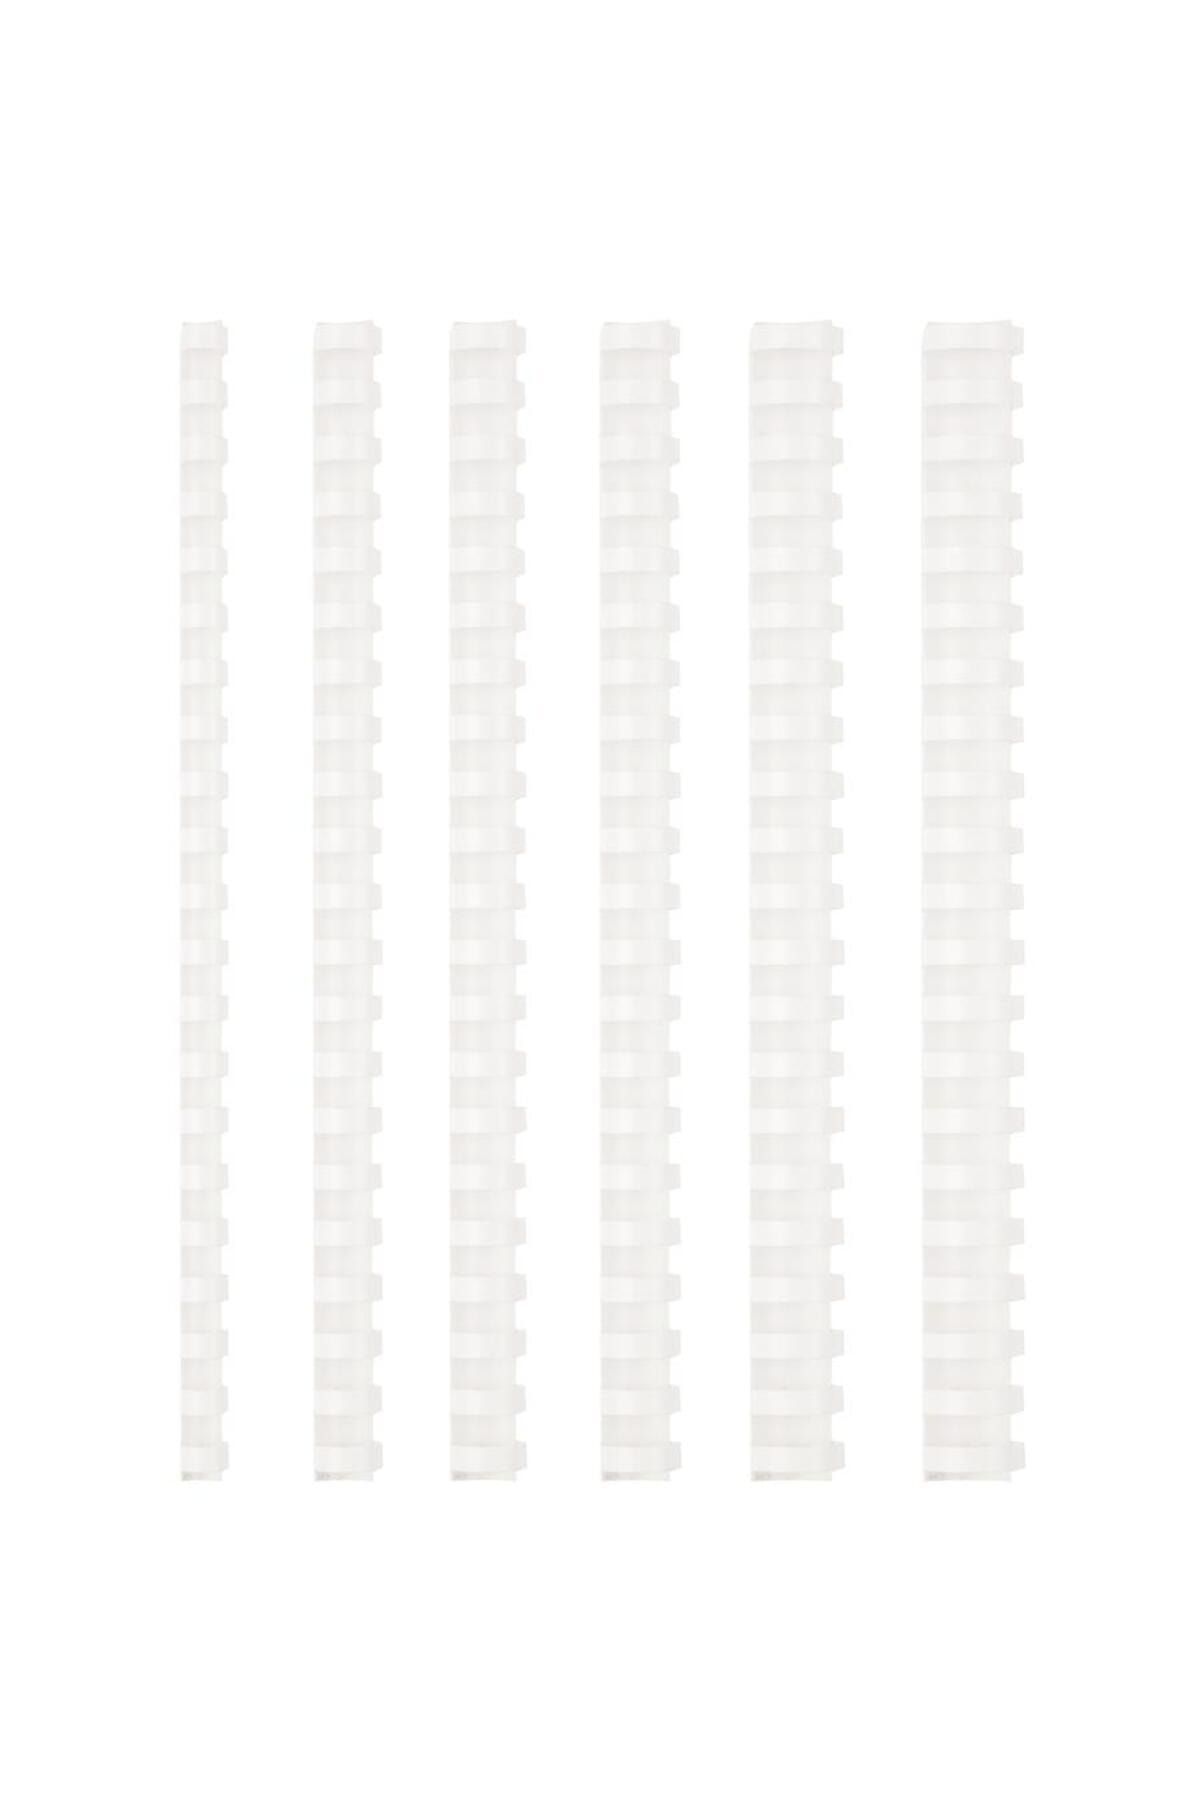 Bigpoint Plastik Spiral 12 Mm Beyaz 100'lü Kutu